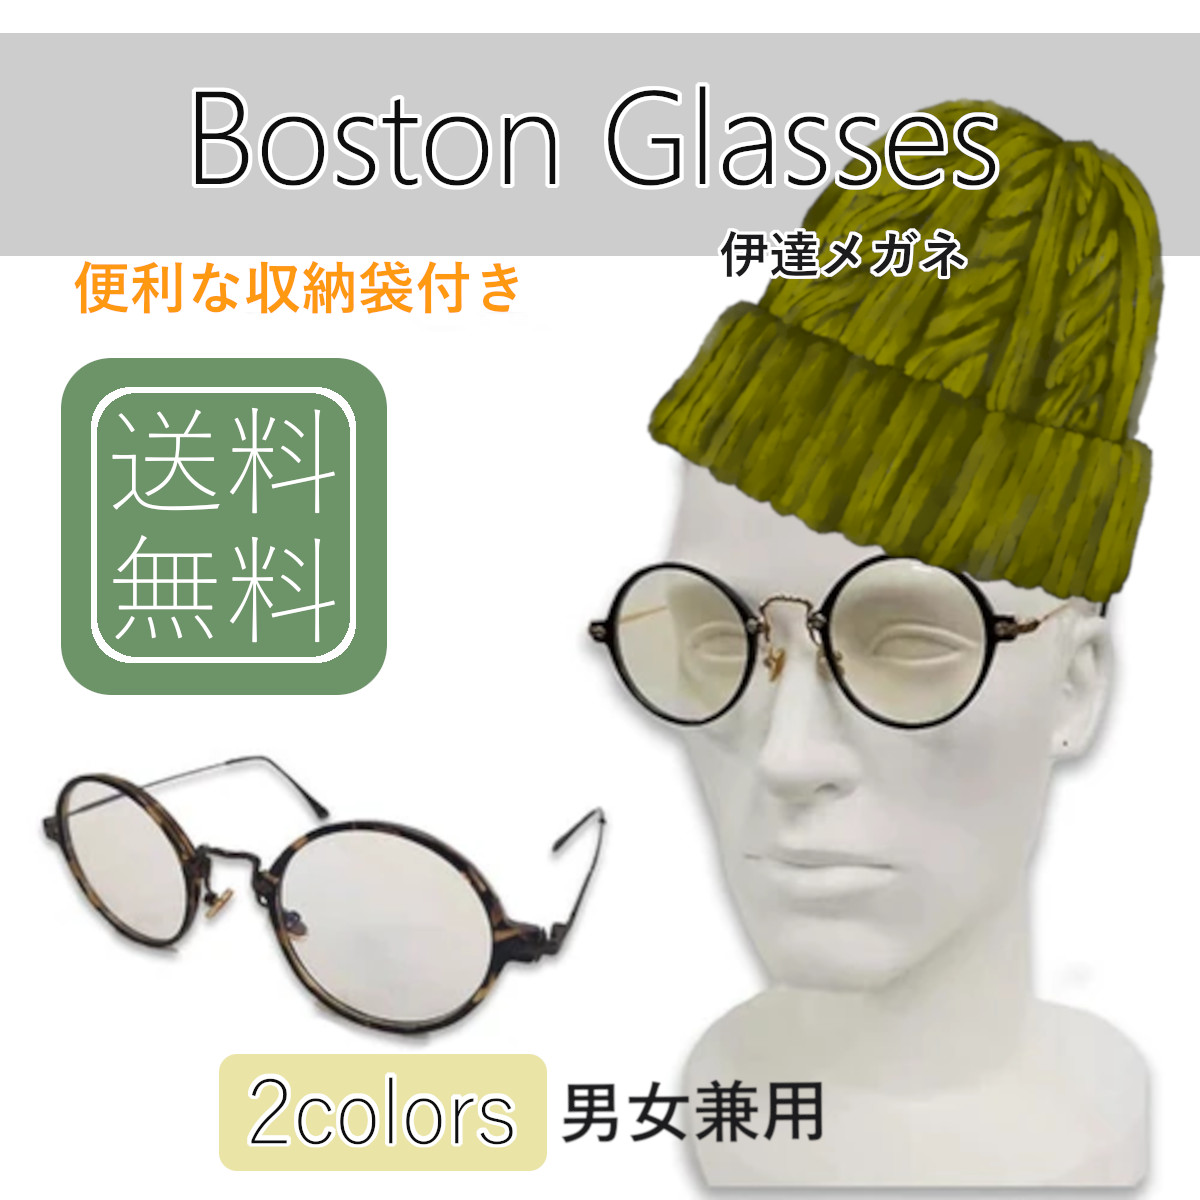  no lenses fashionable eyeglasses lady's men's stylish dressing up Boston clear lens transparent cheap glasses tortoise shell manner circle . round 